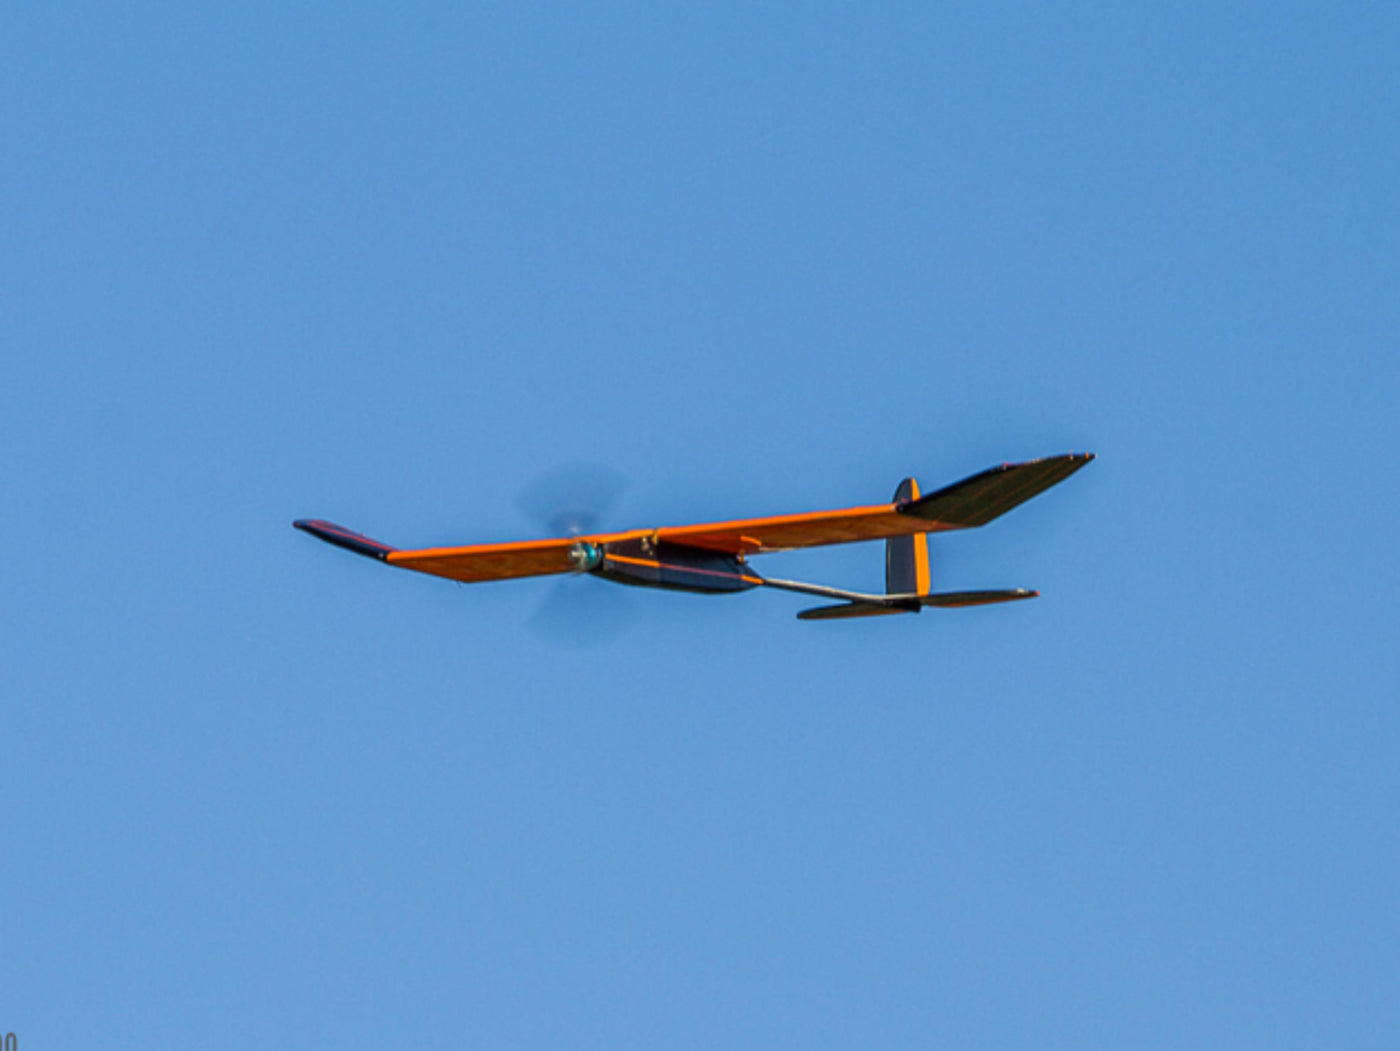 The Quido 1 Meter Electric Plane by Aero-naut